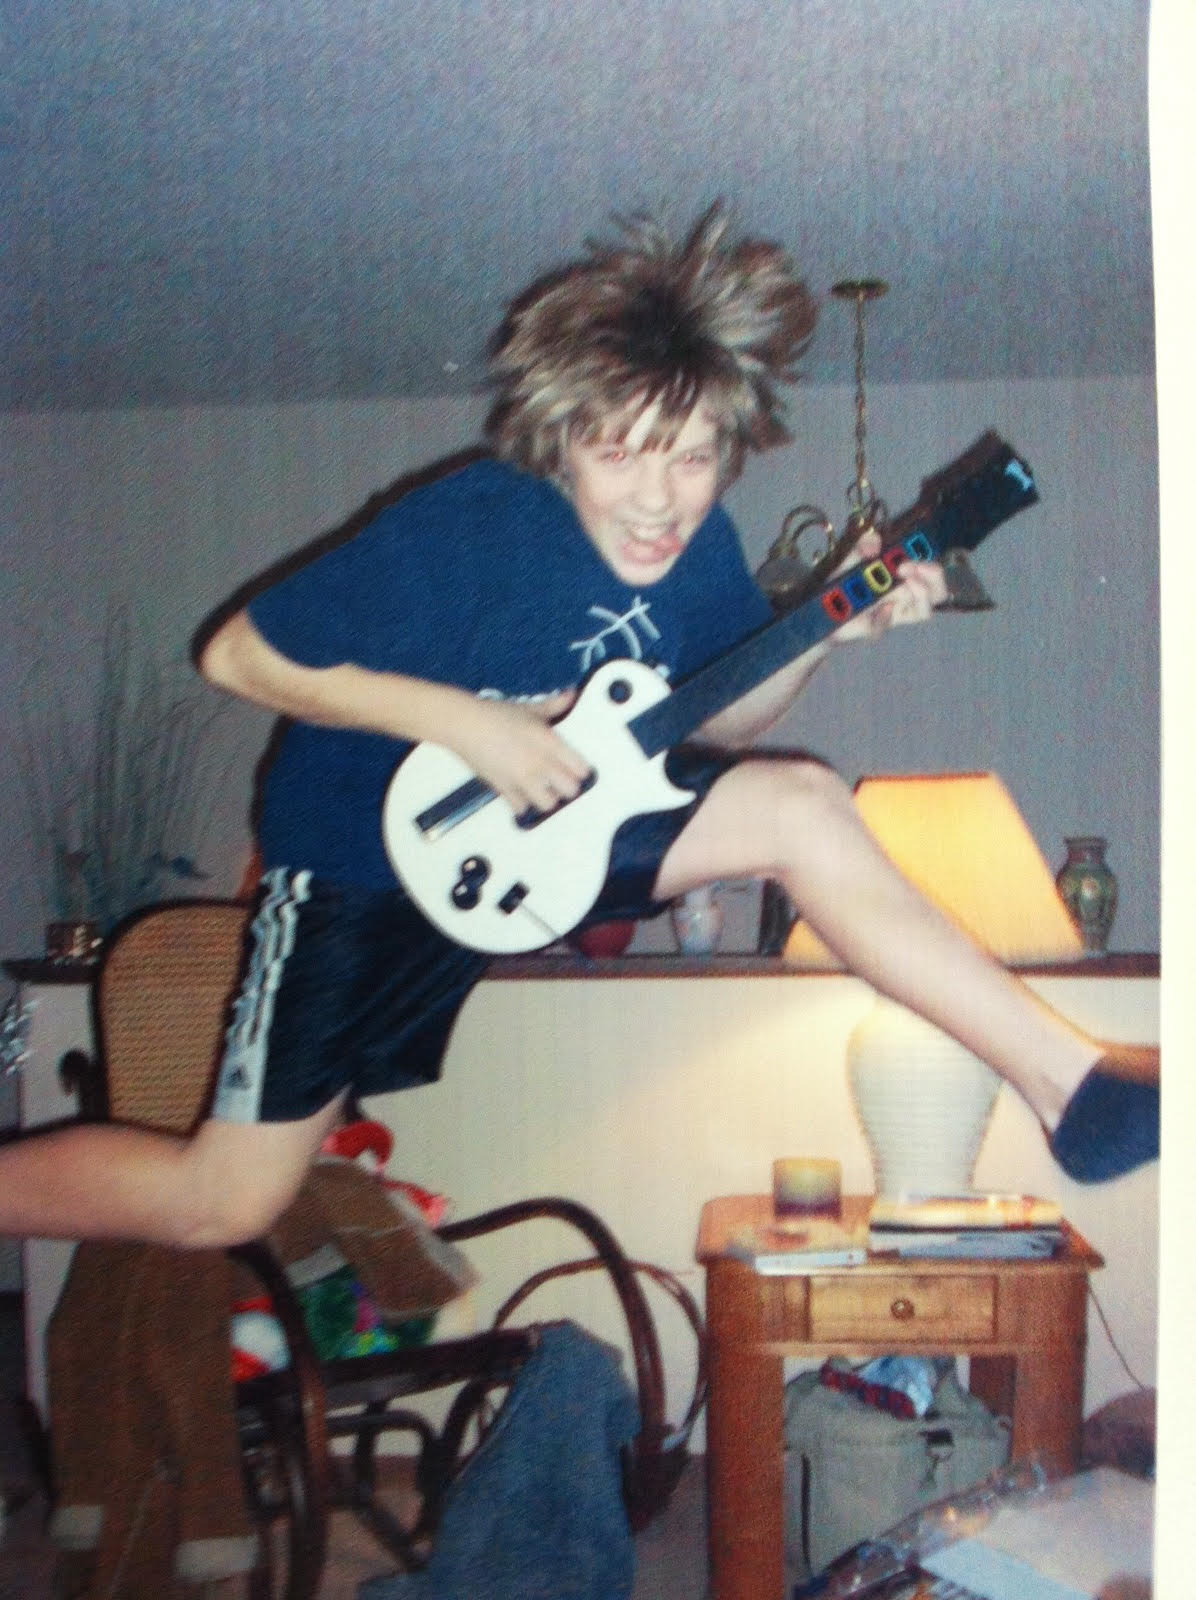 Chris Garten playing guitar hero